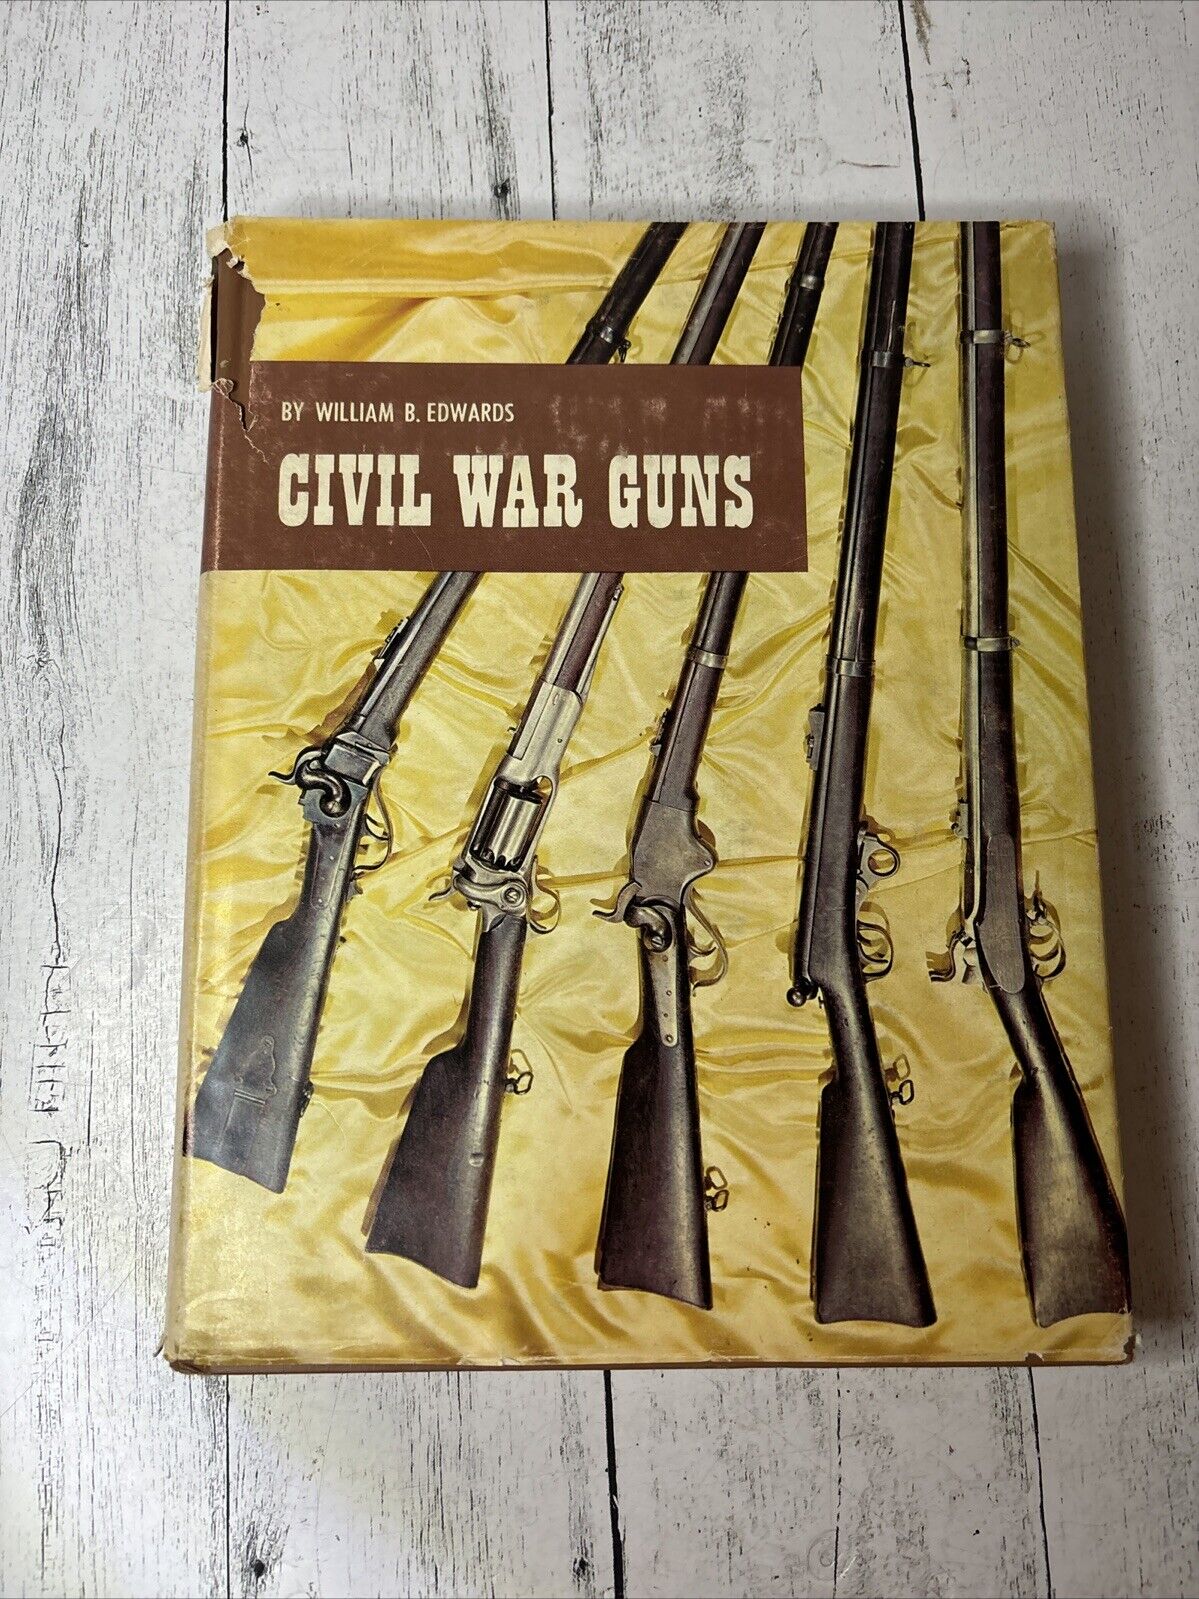 Civil War Guns Vintage 1962 Hardcover Book by William B Edwards